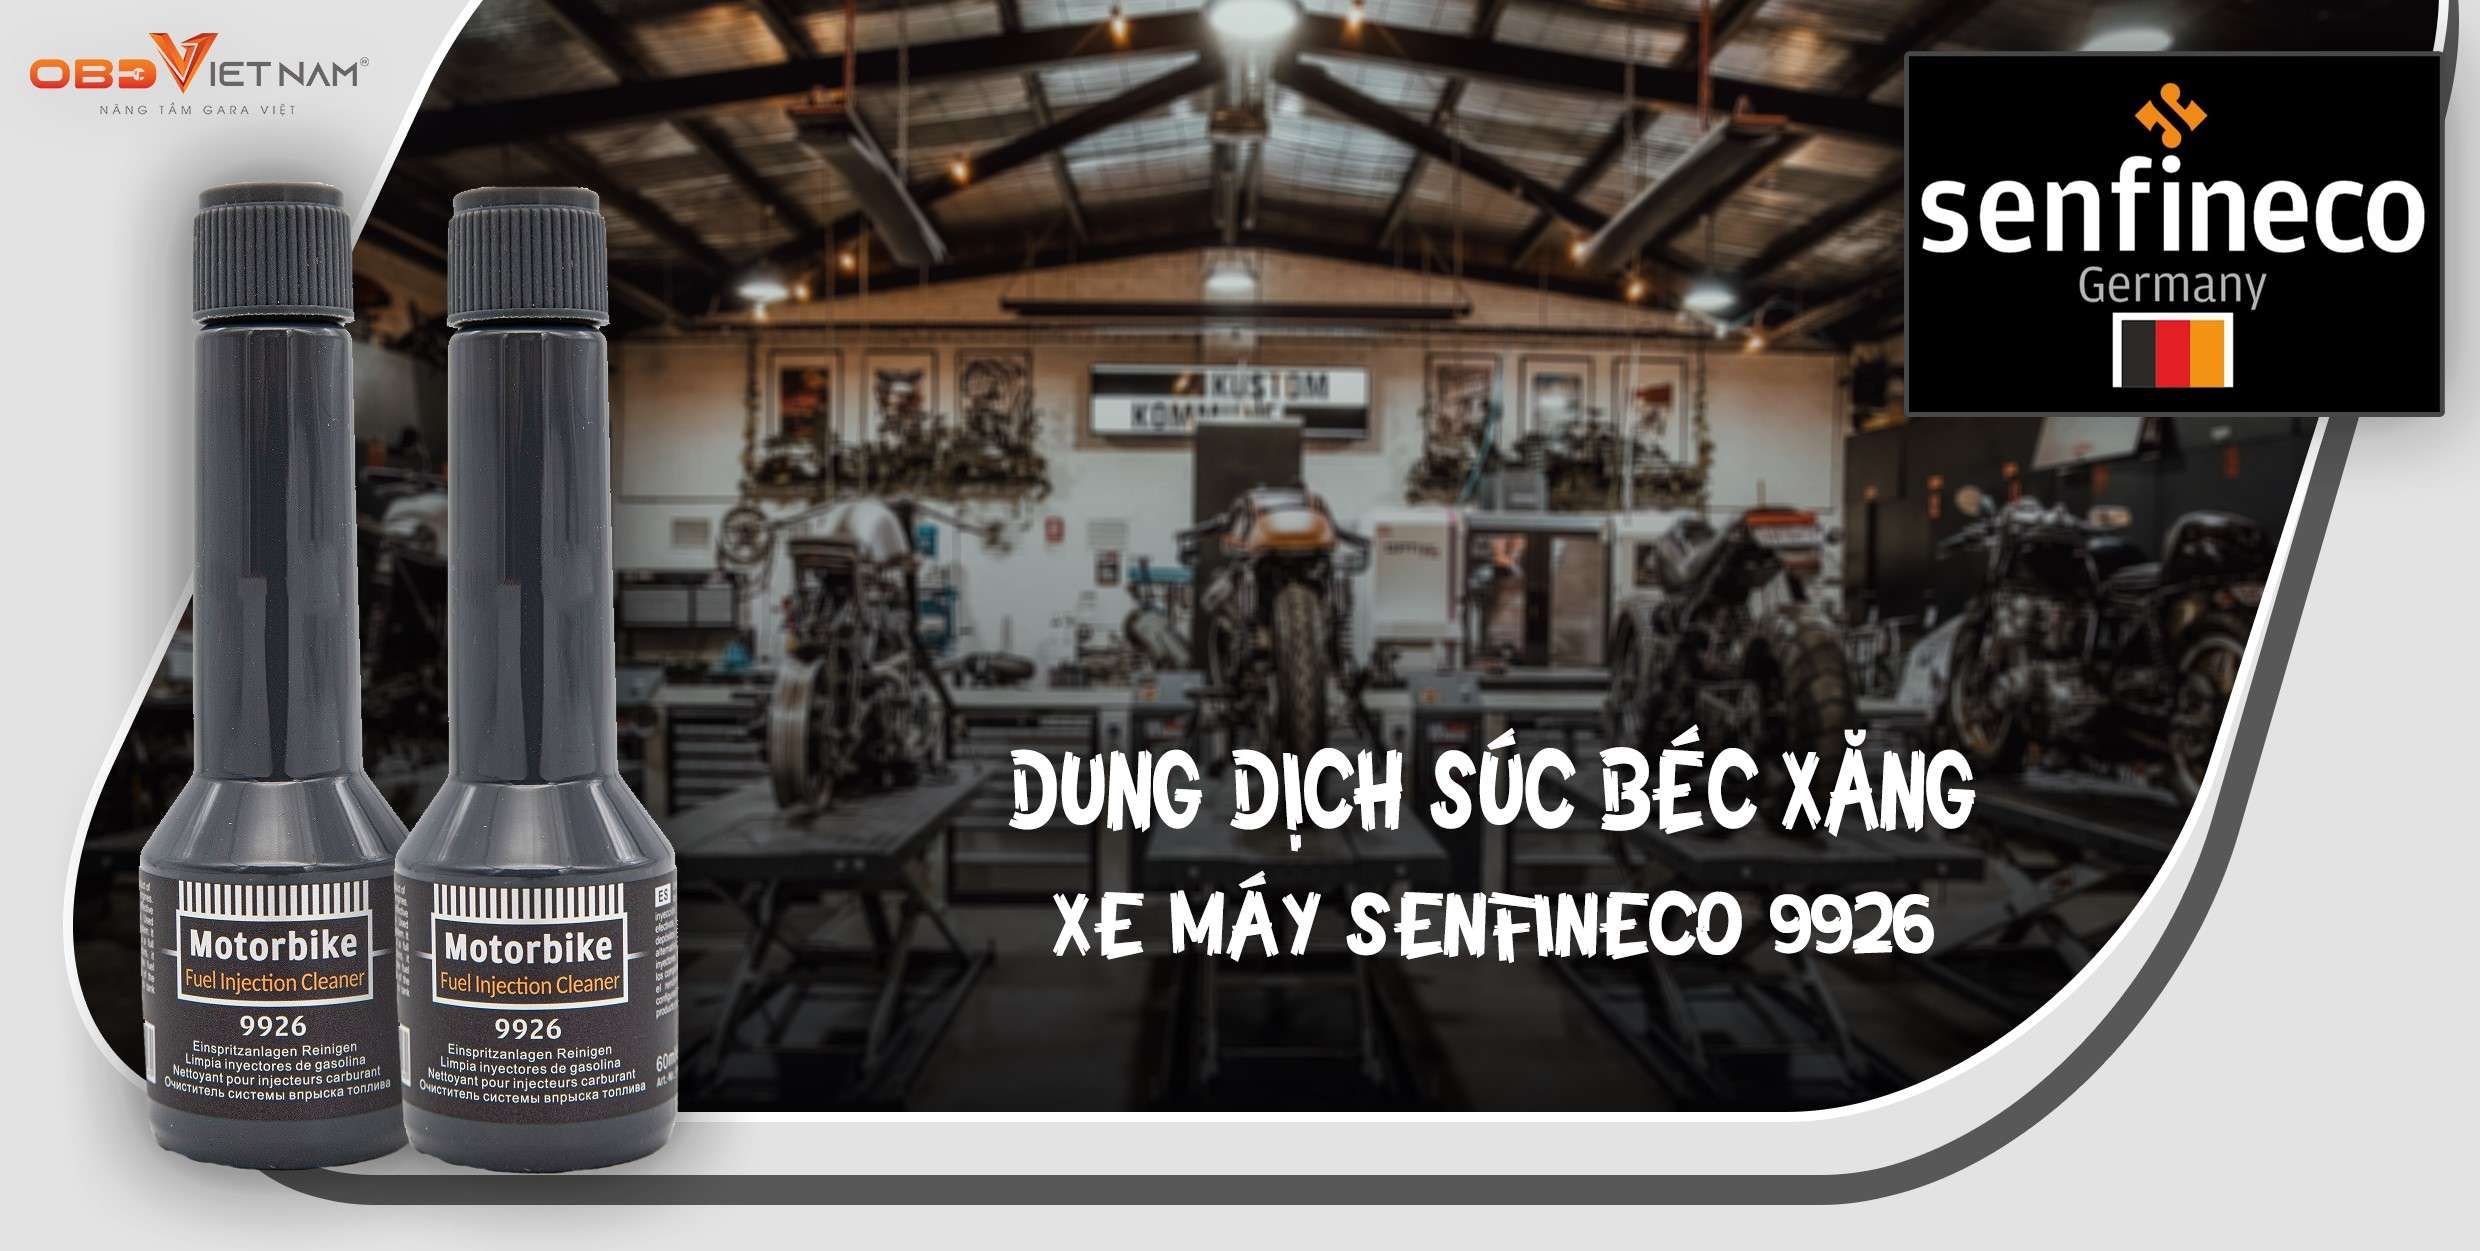 dung-dich-suc-bec-xang-xe-may-senfineco-9926-obdvietnam1